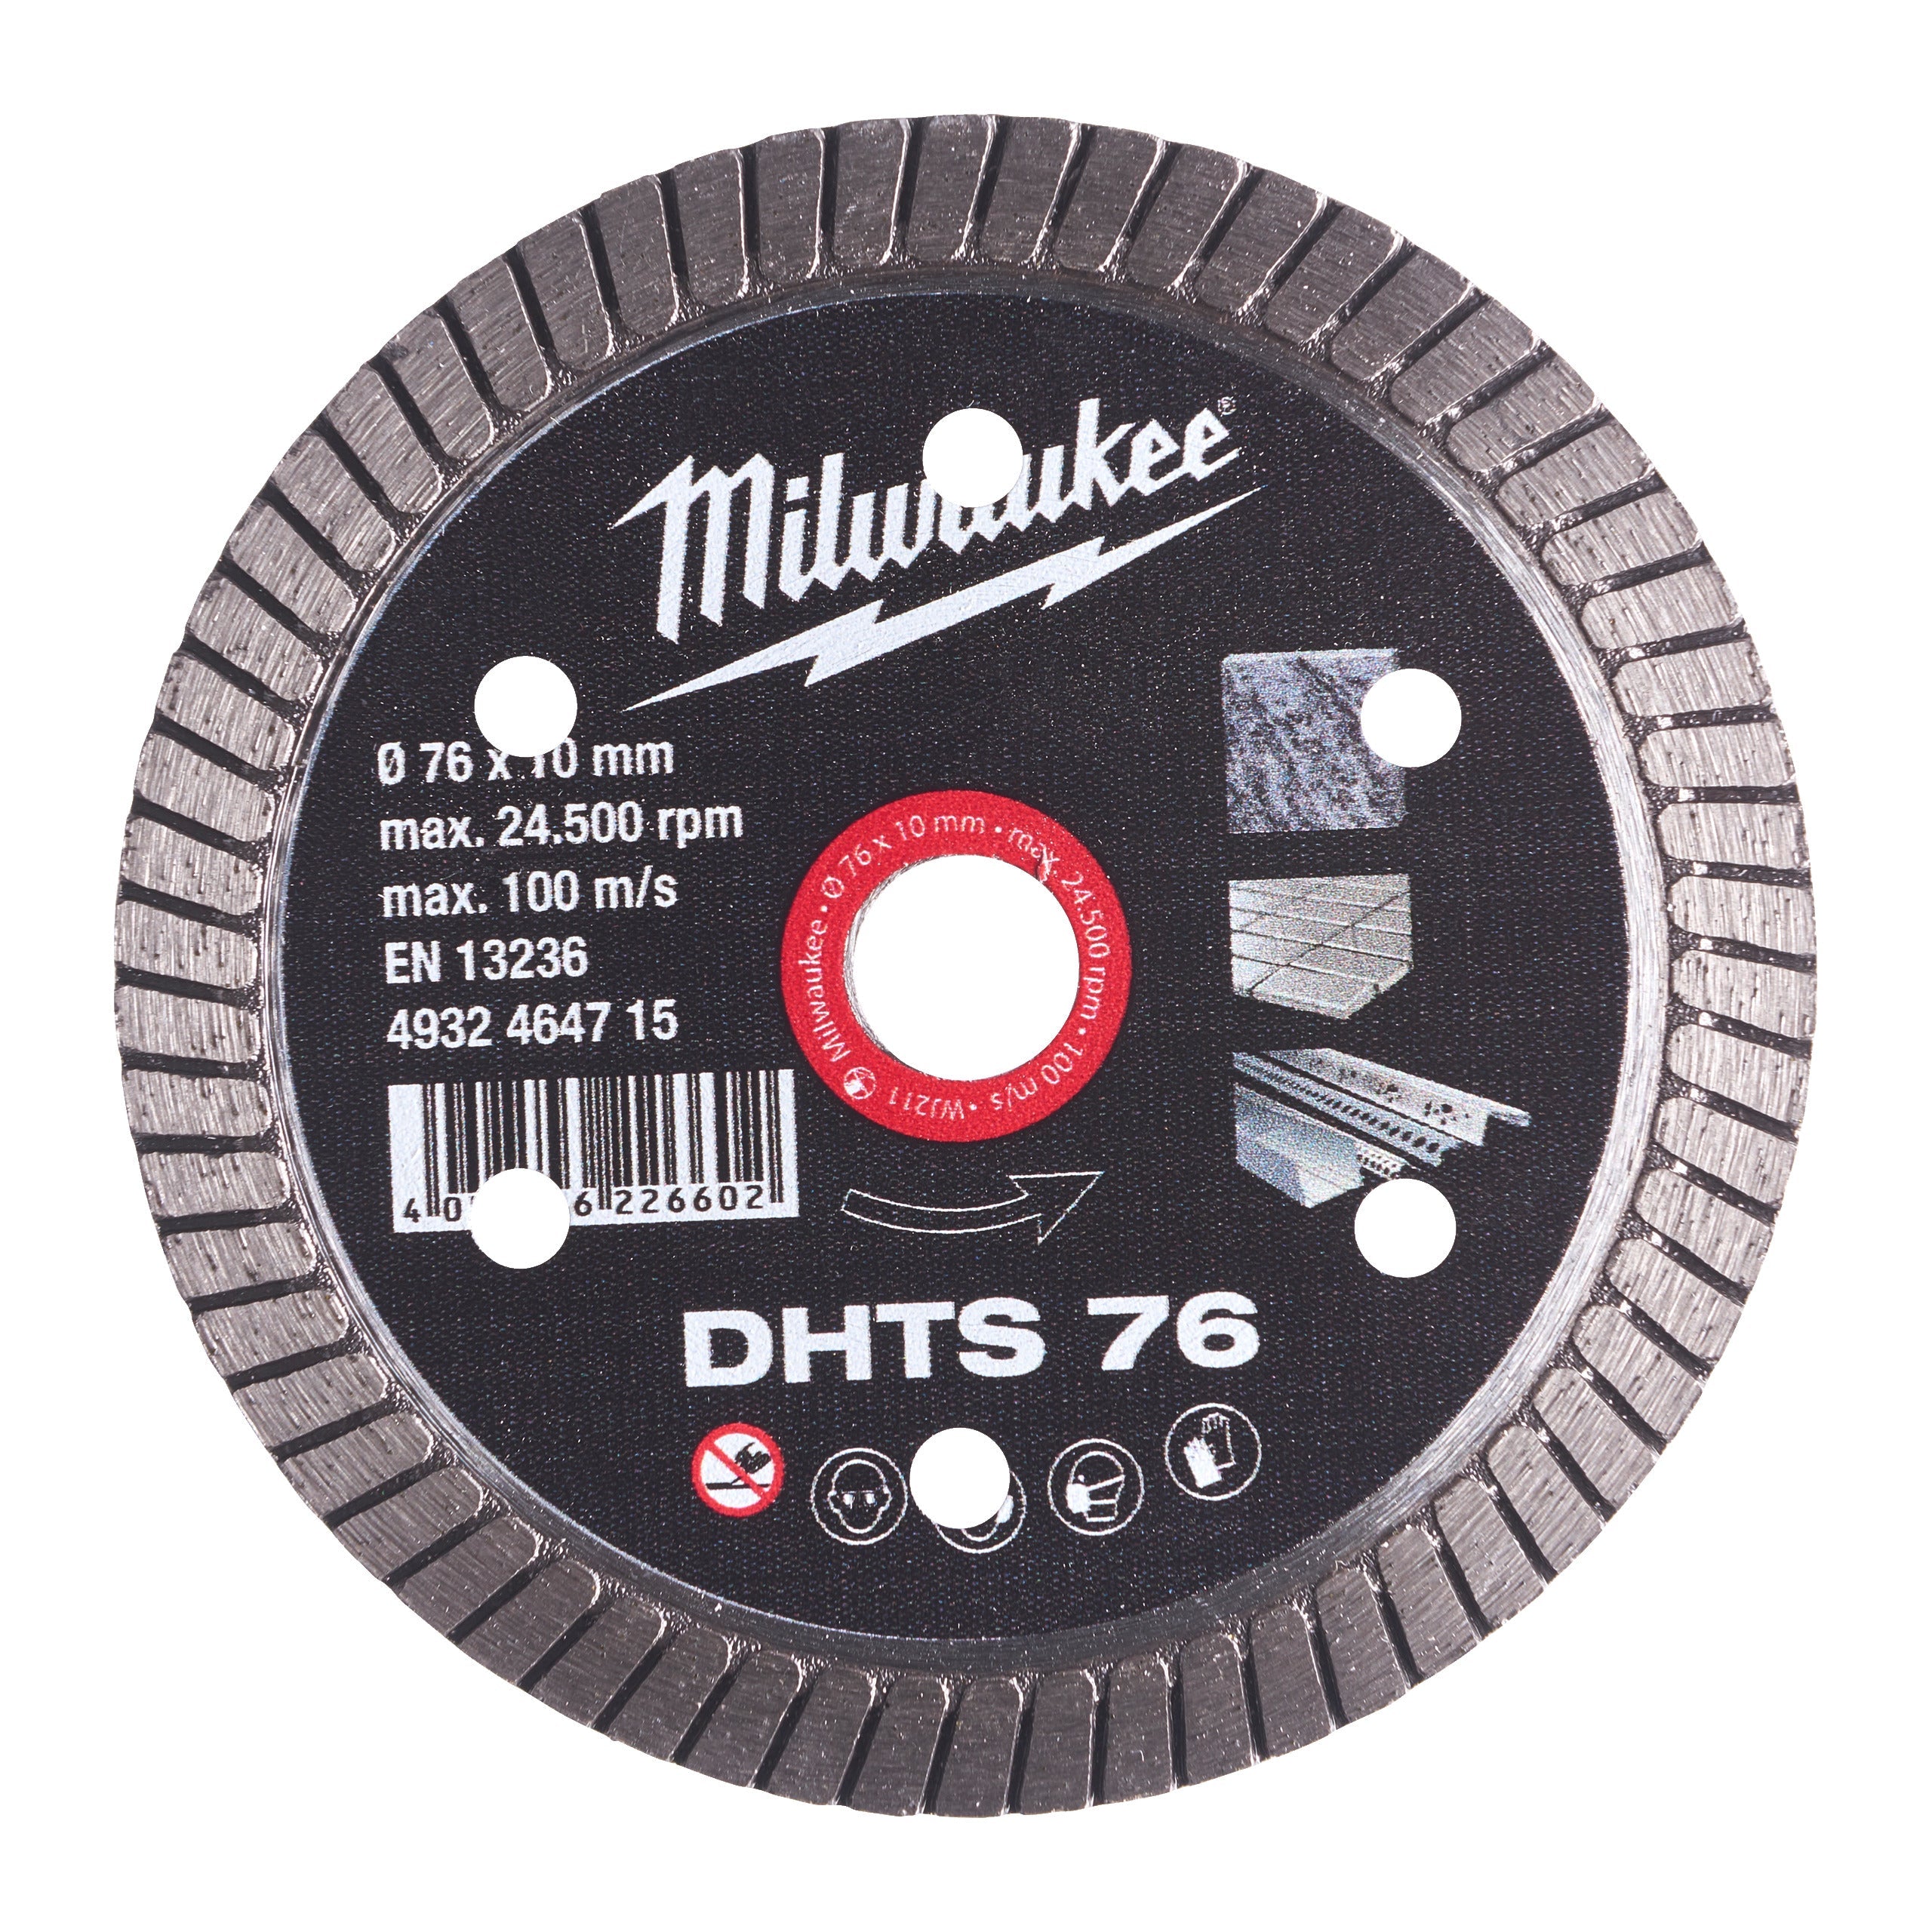 Discuri diamantate DHTS 76 mm, Milwaukee cod 4932464715